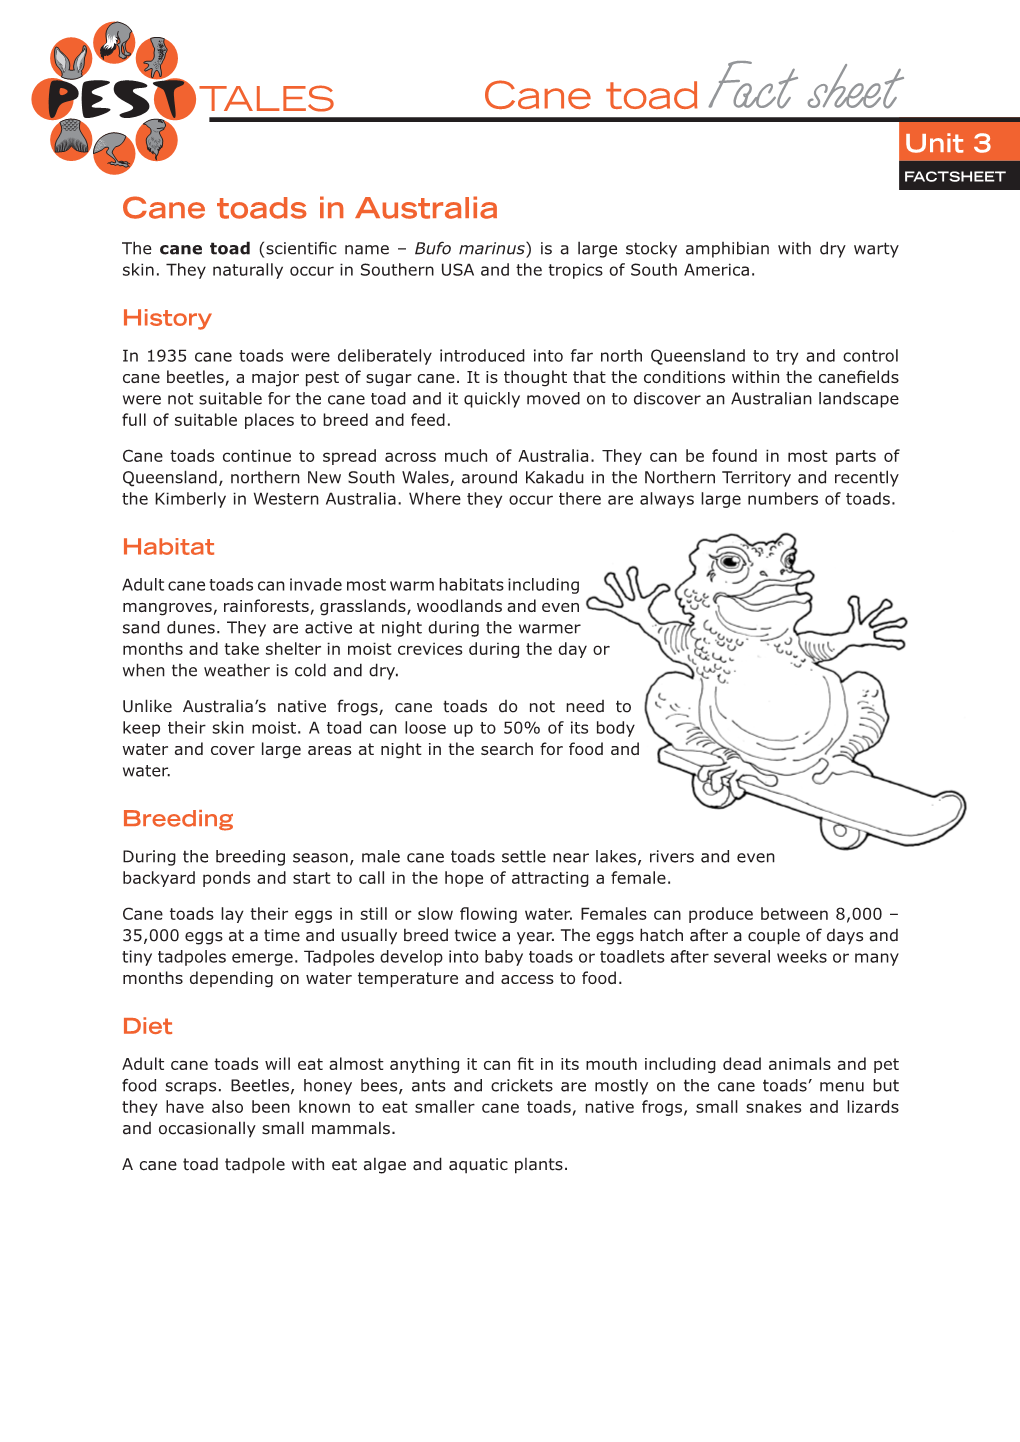 Cane Toads in Australia Fact Sheet